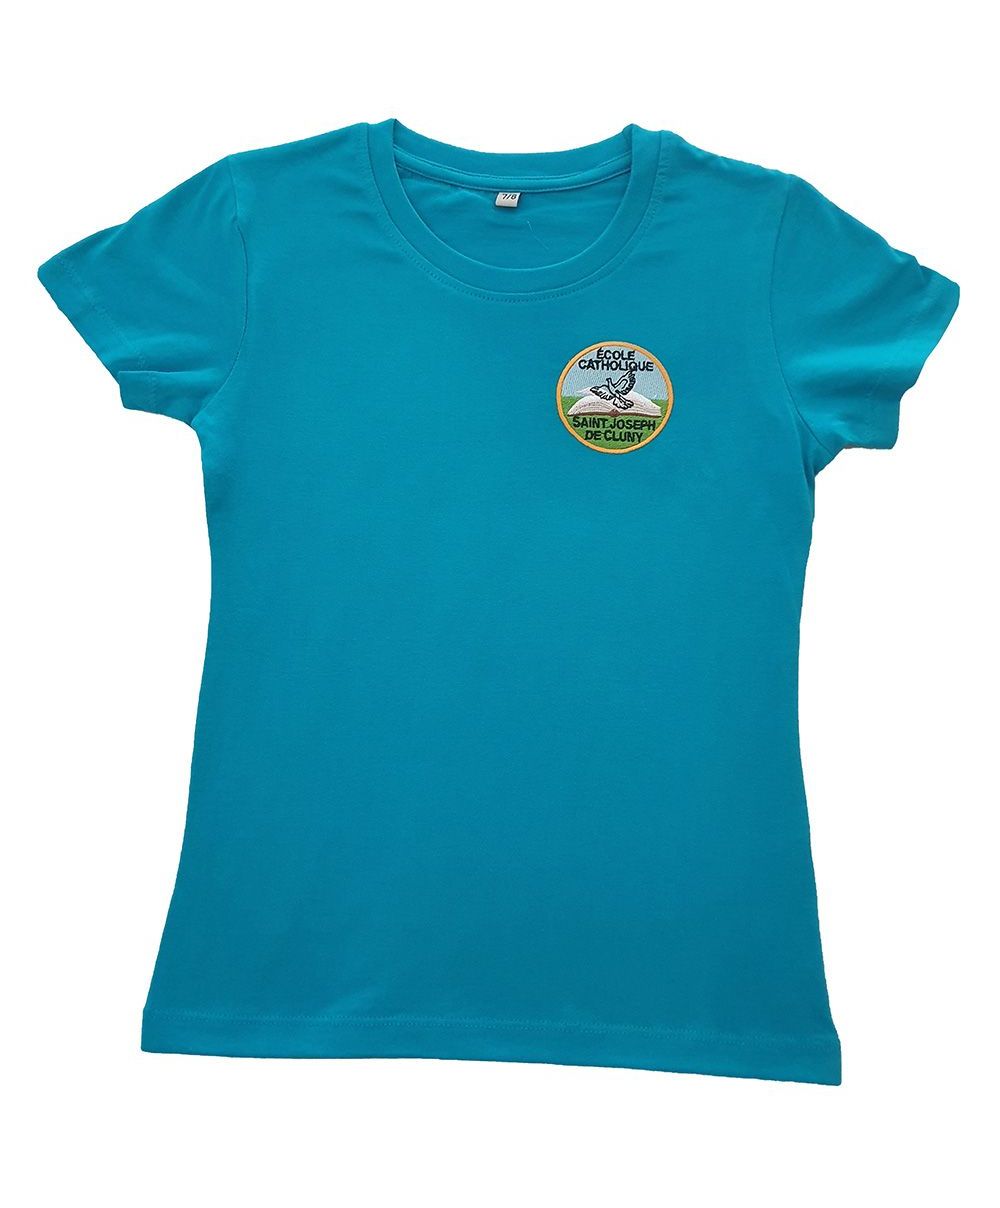 Fille - Tee-Shirt Bleu - Ecole Saint Joseph de Cluny